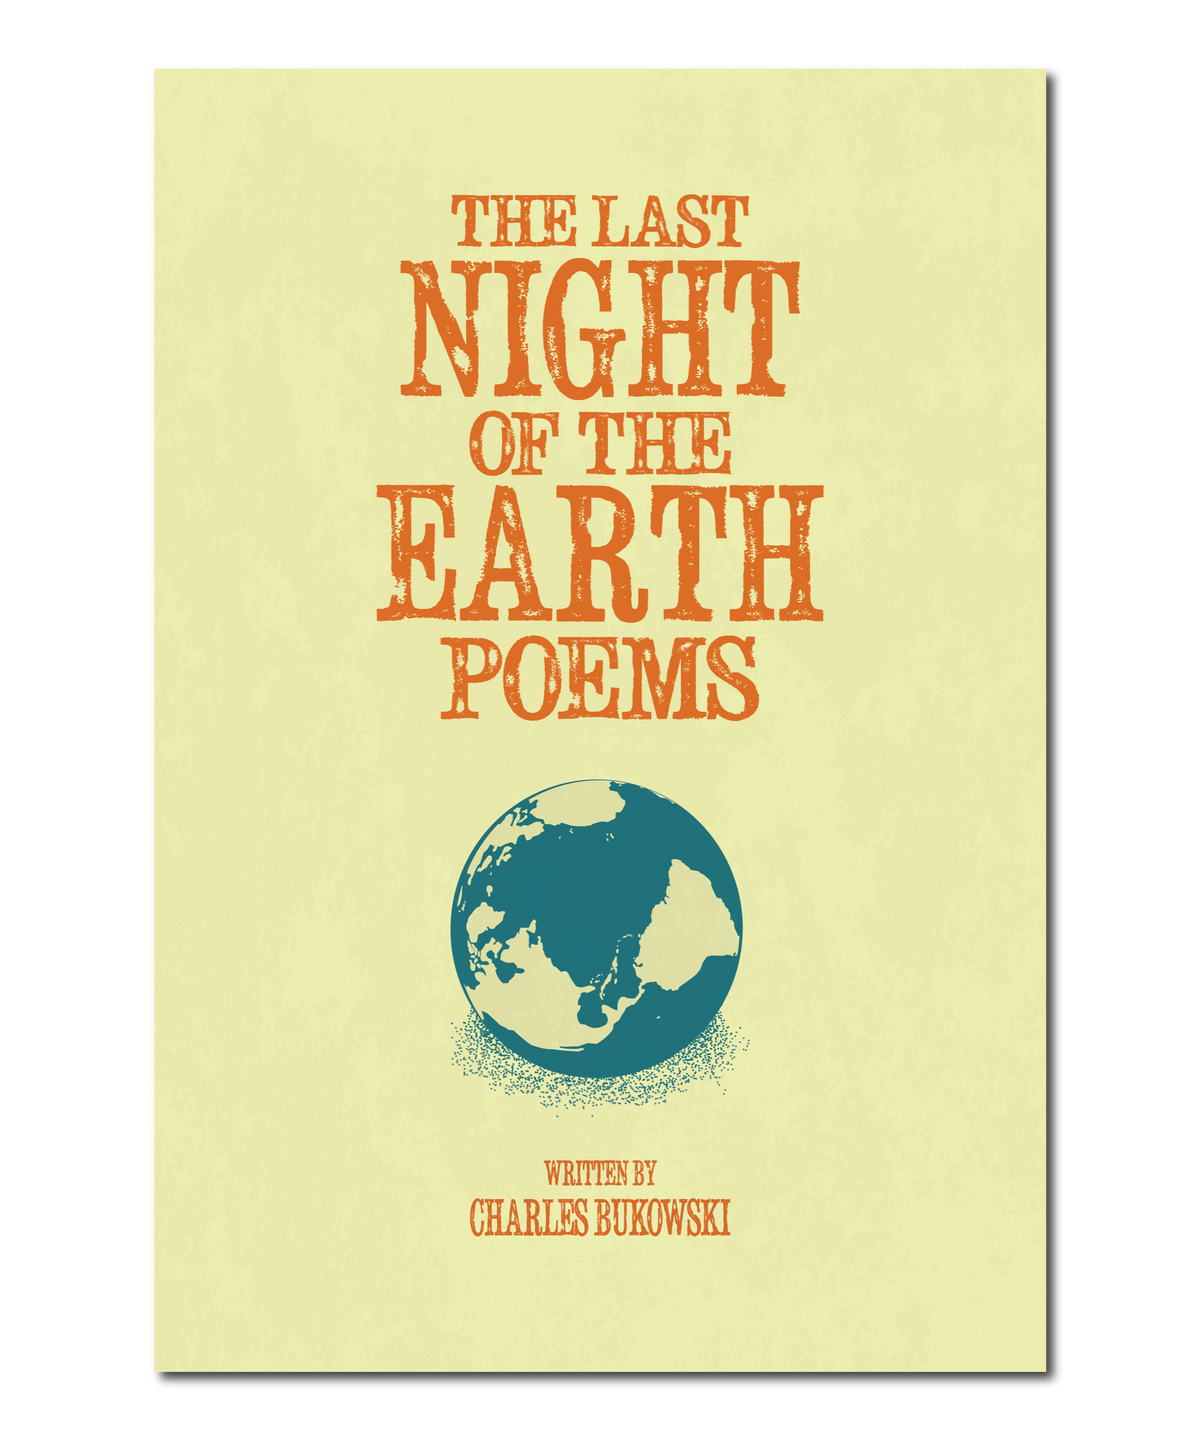 Original Print Reinterpretation of the Charles Bukowski Book, "The Last Night of the Earth Poems”